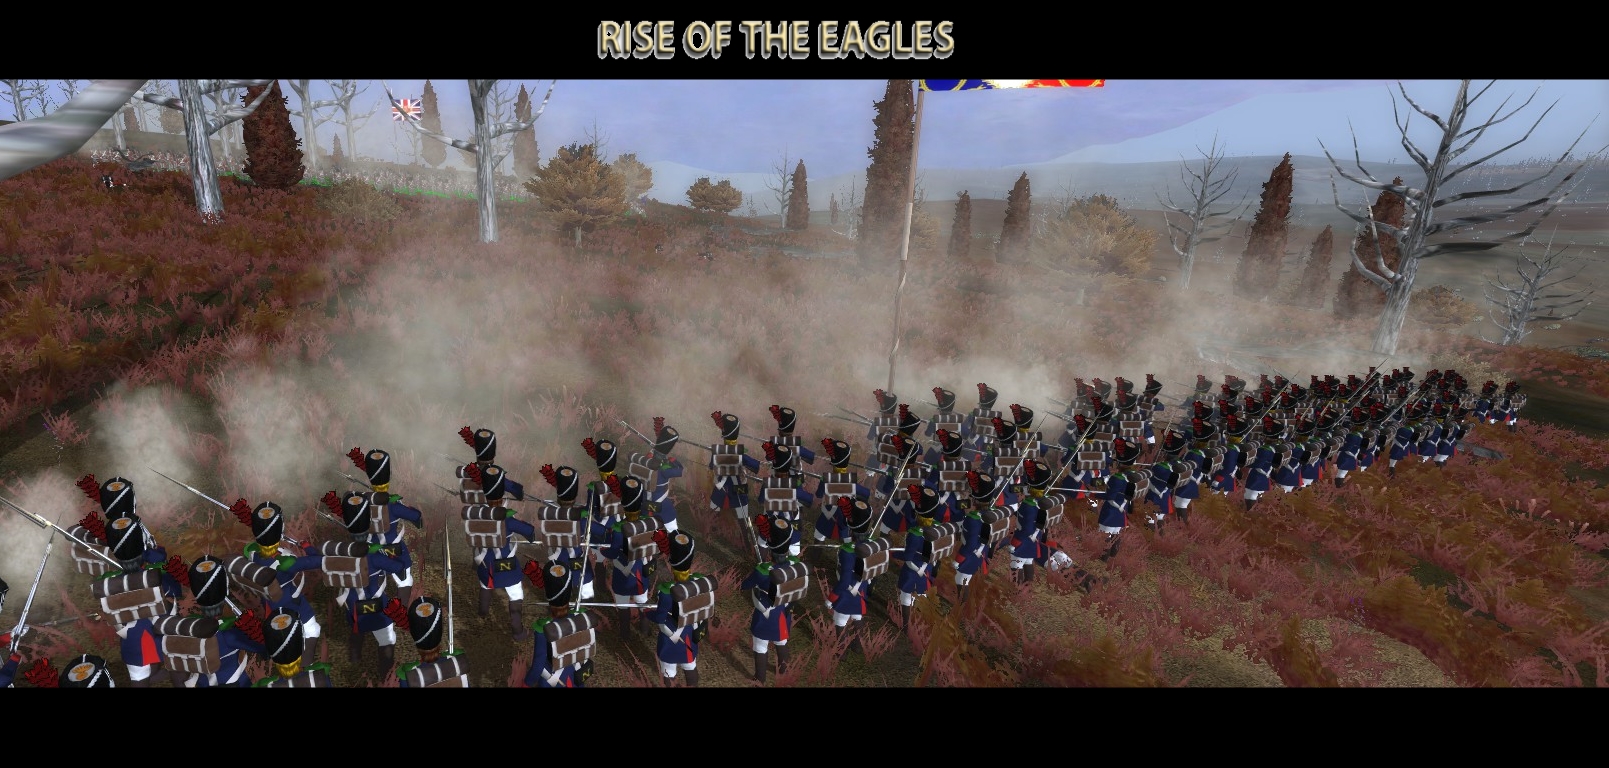 download the new version European War 7: Medieval